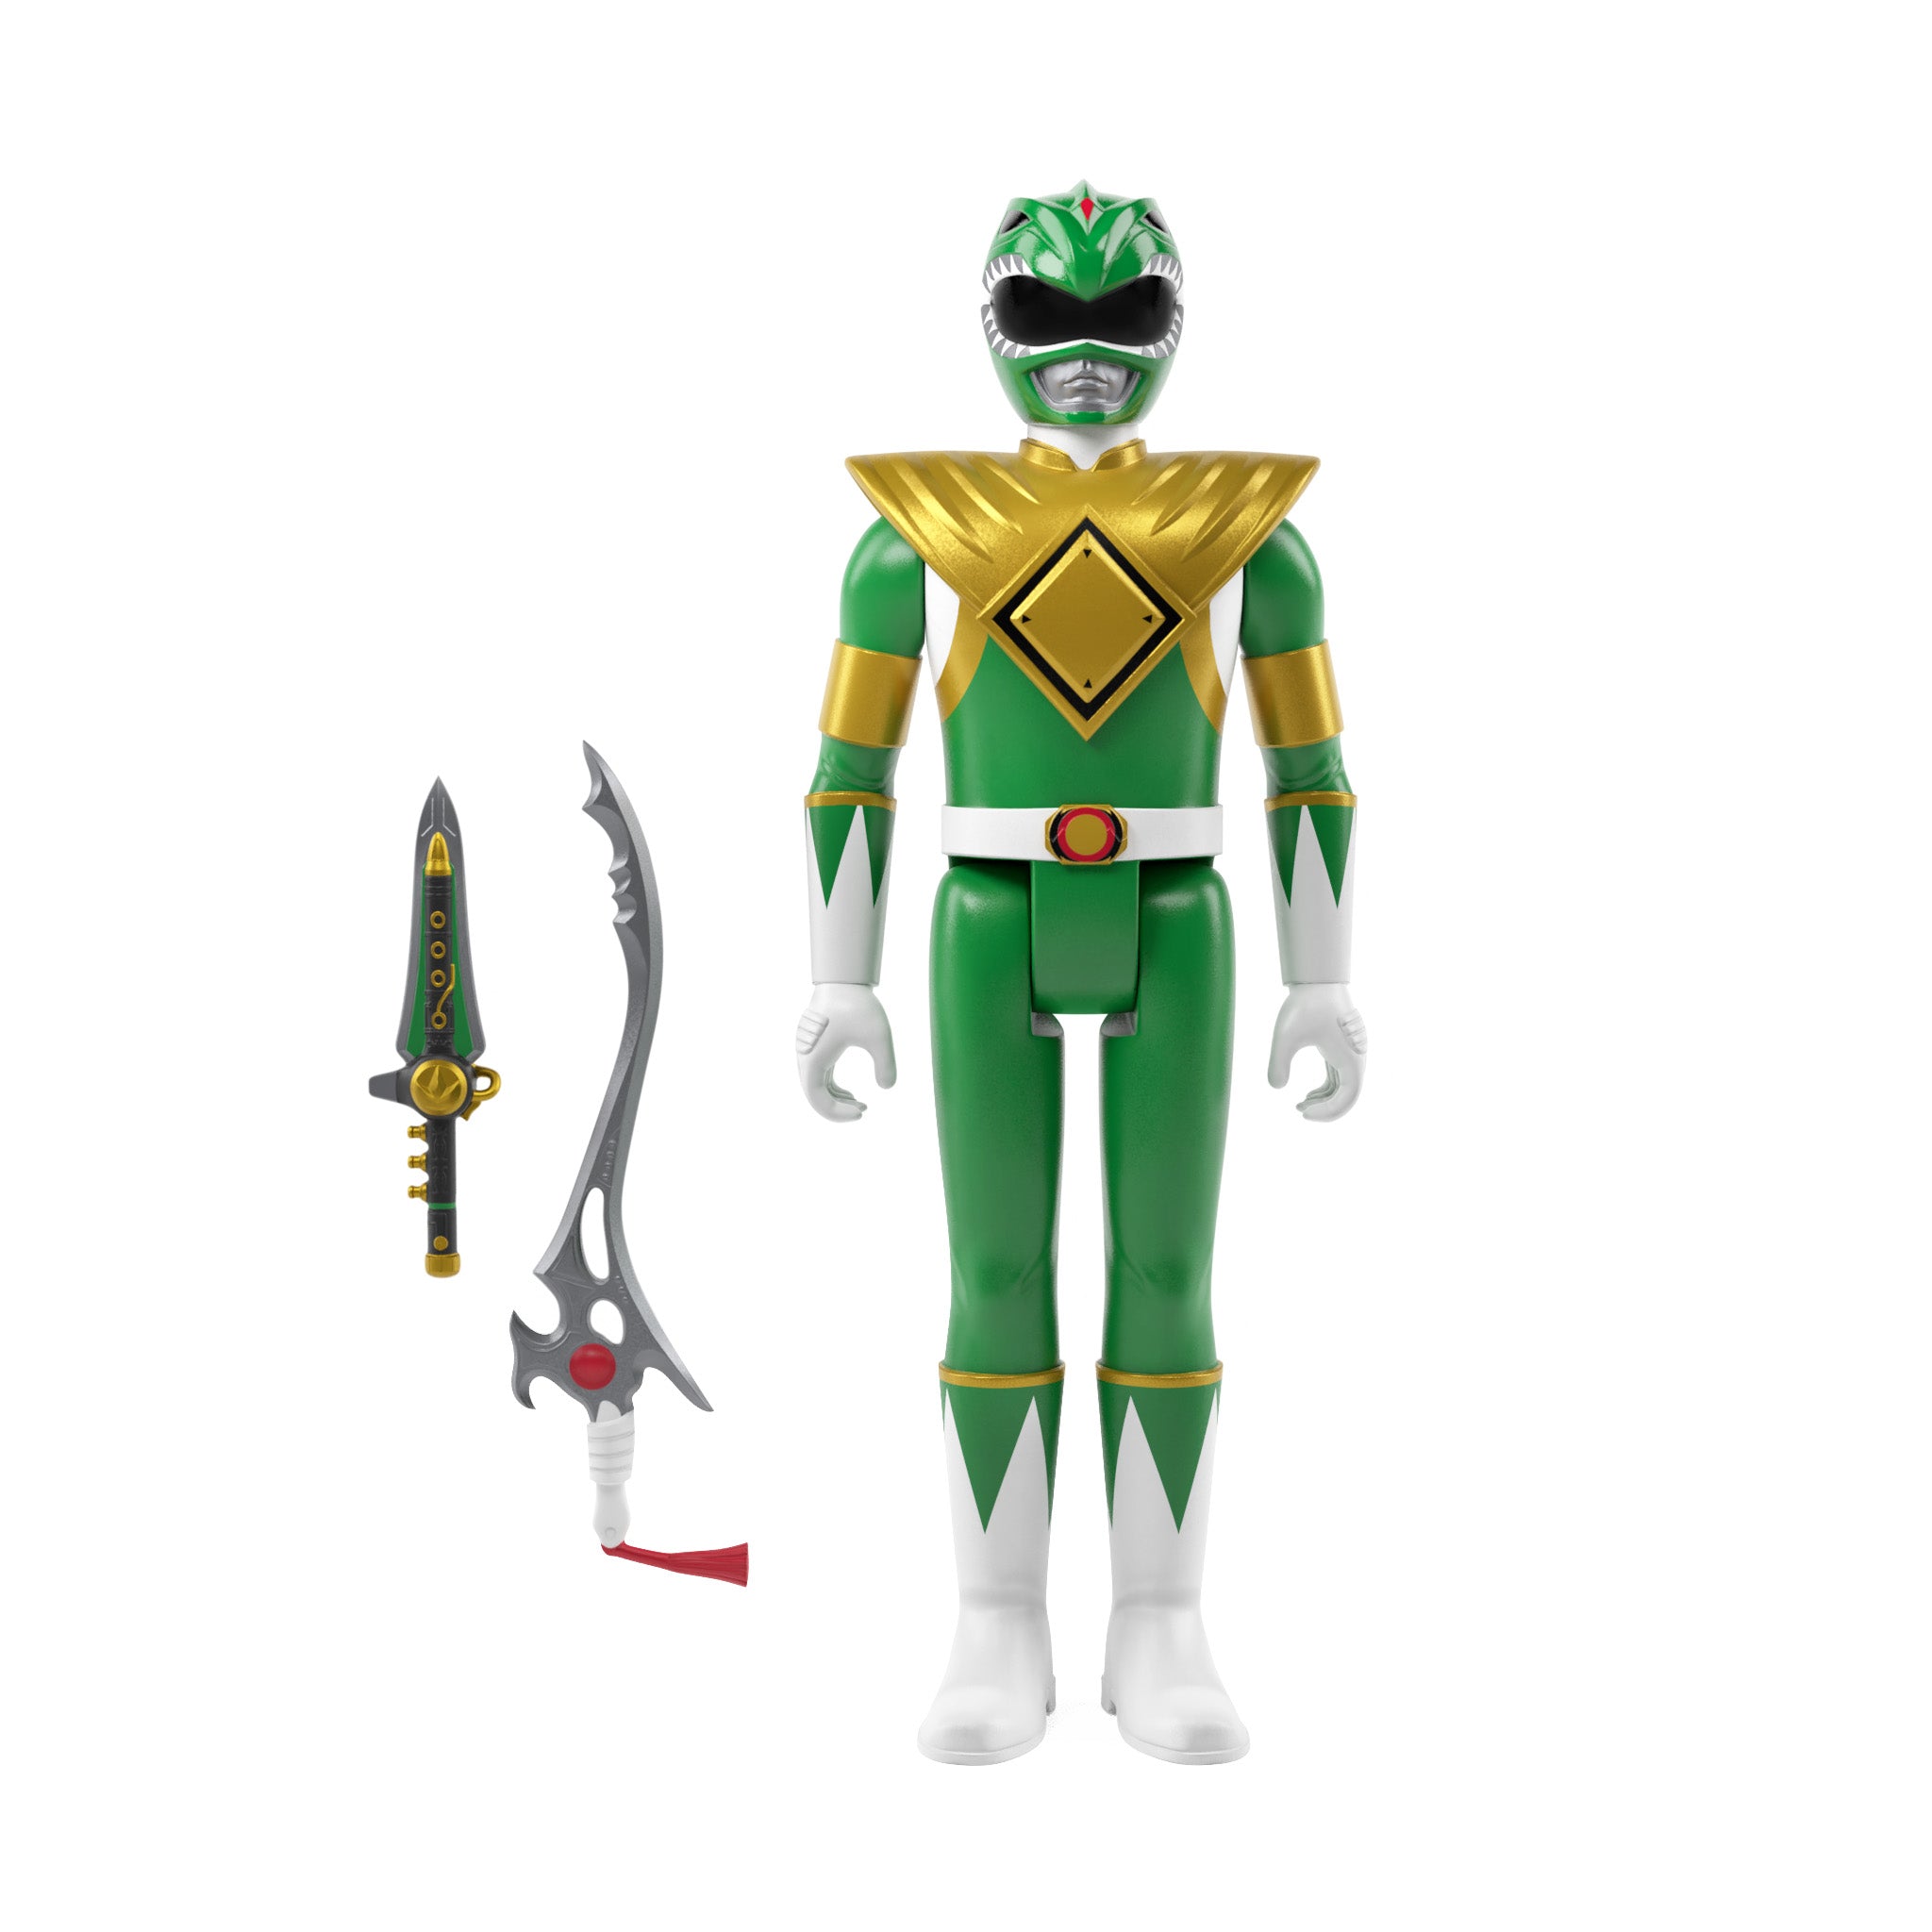 Mighty Morphin Power Rangers Reaction Figure Wave 1  - Green Ranger